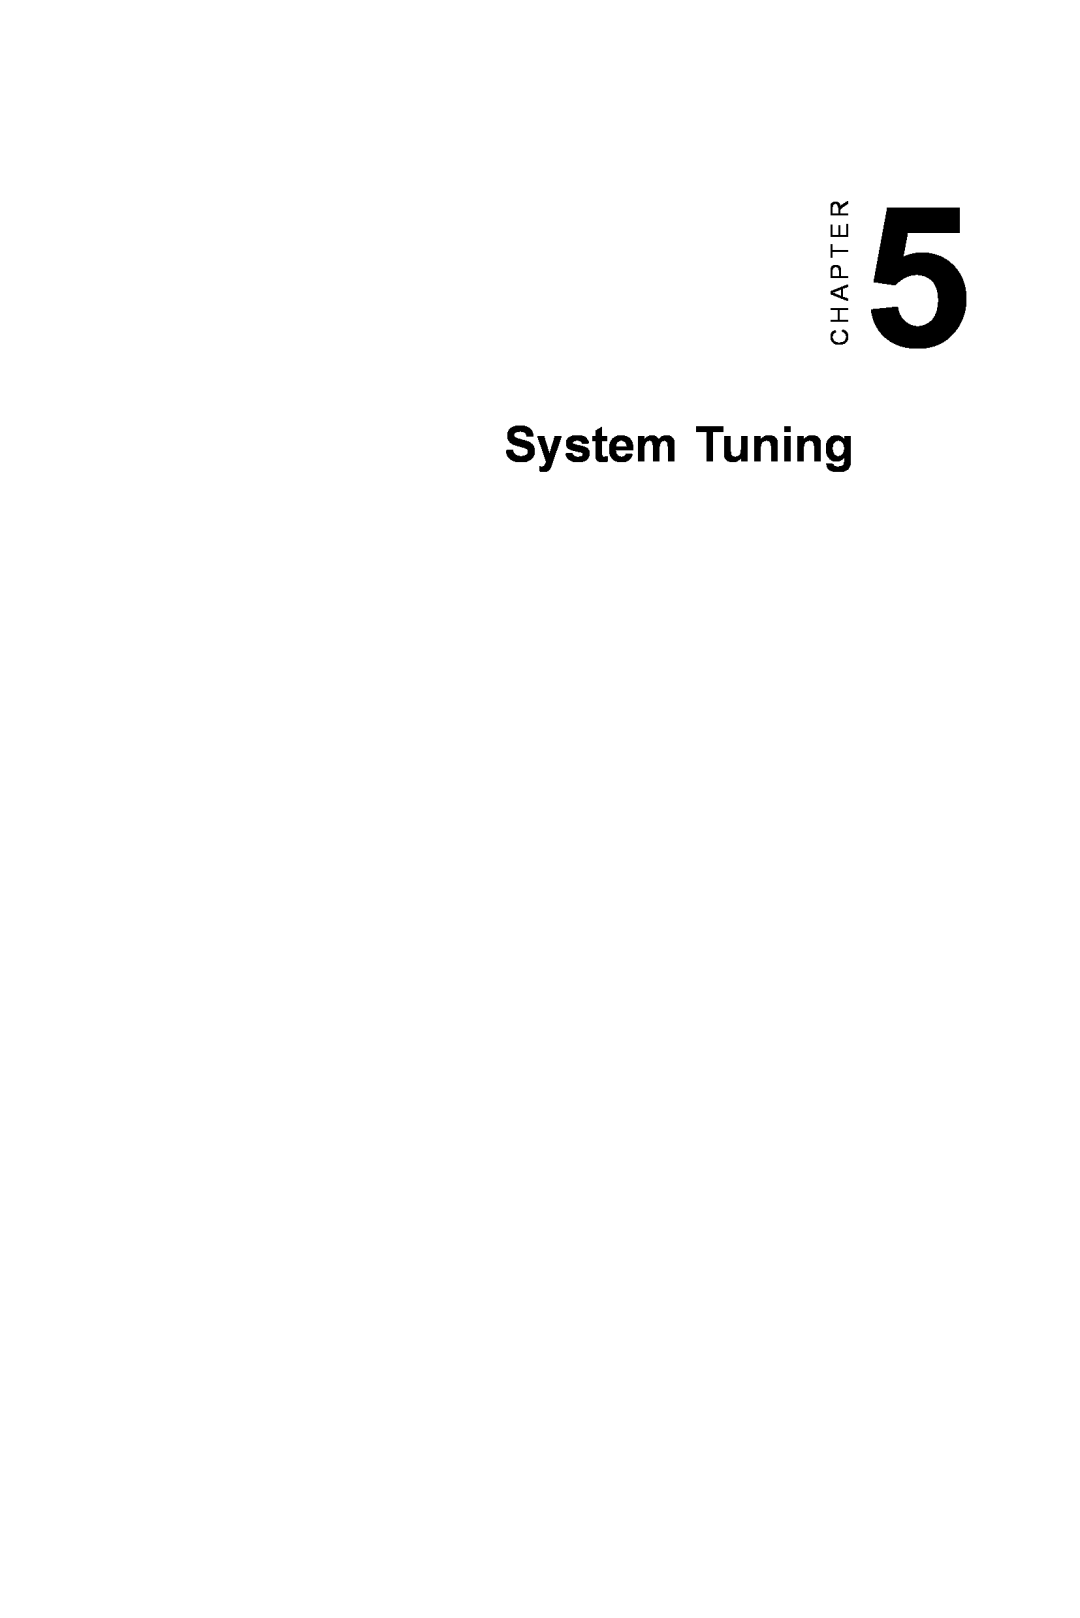 Advantech TPC-1260 manual System Tuning, C H A P T E R 